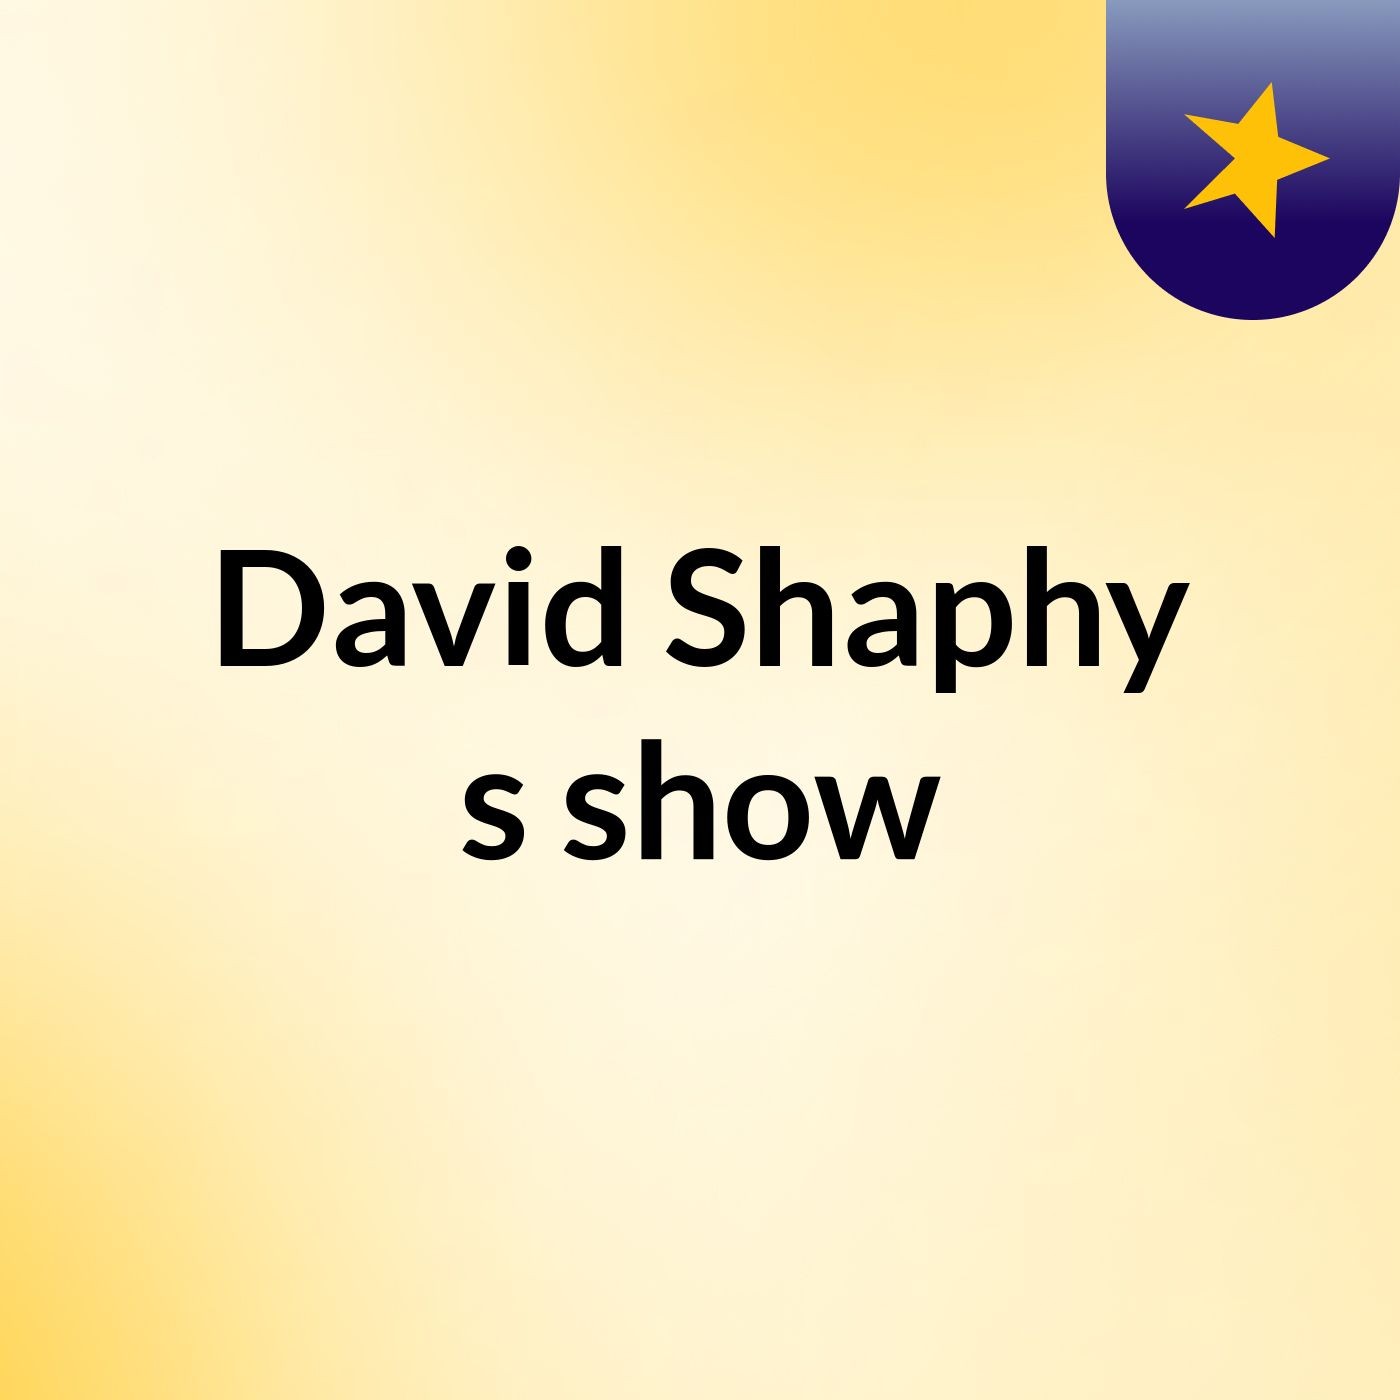 David Shaphy's show